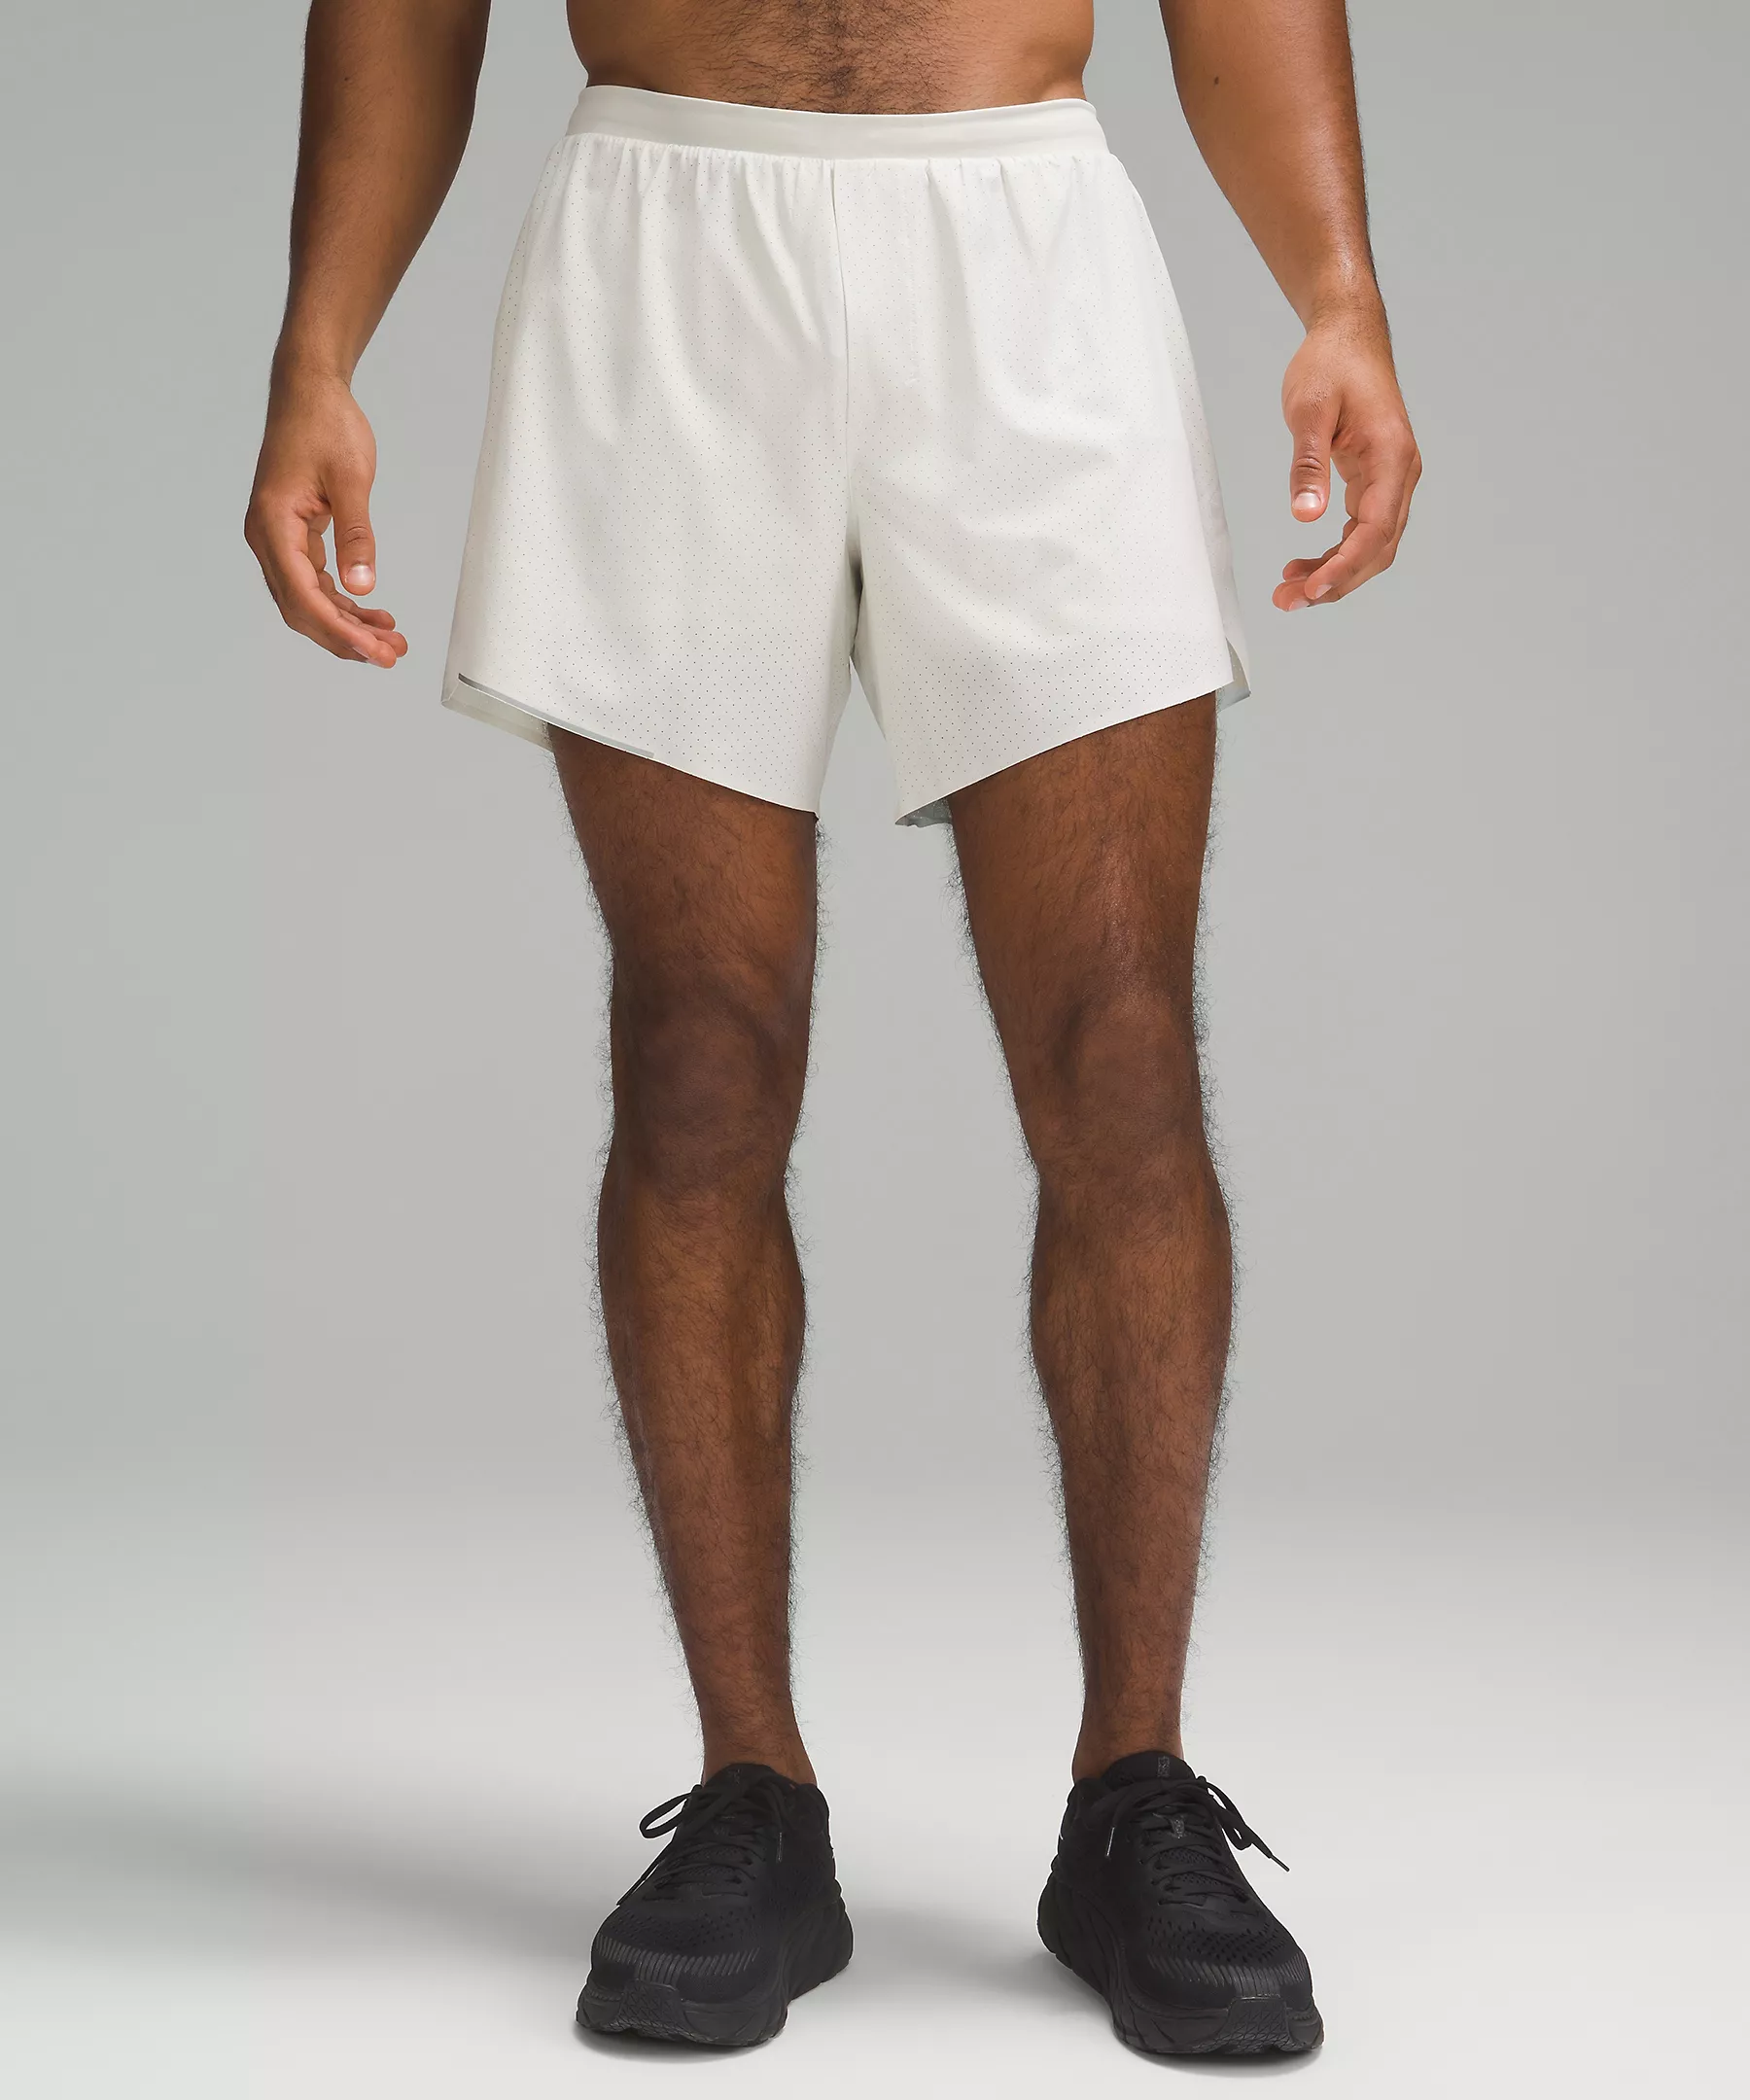 A close up photo of a man wearing the white lulu lemon sport shorts